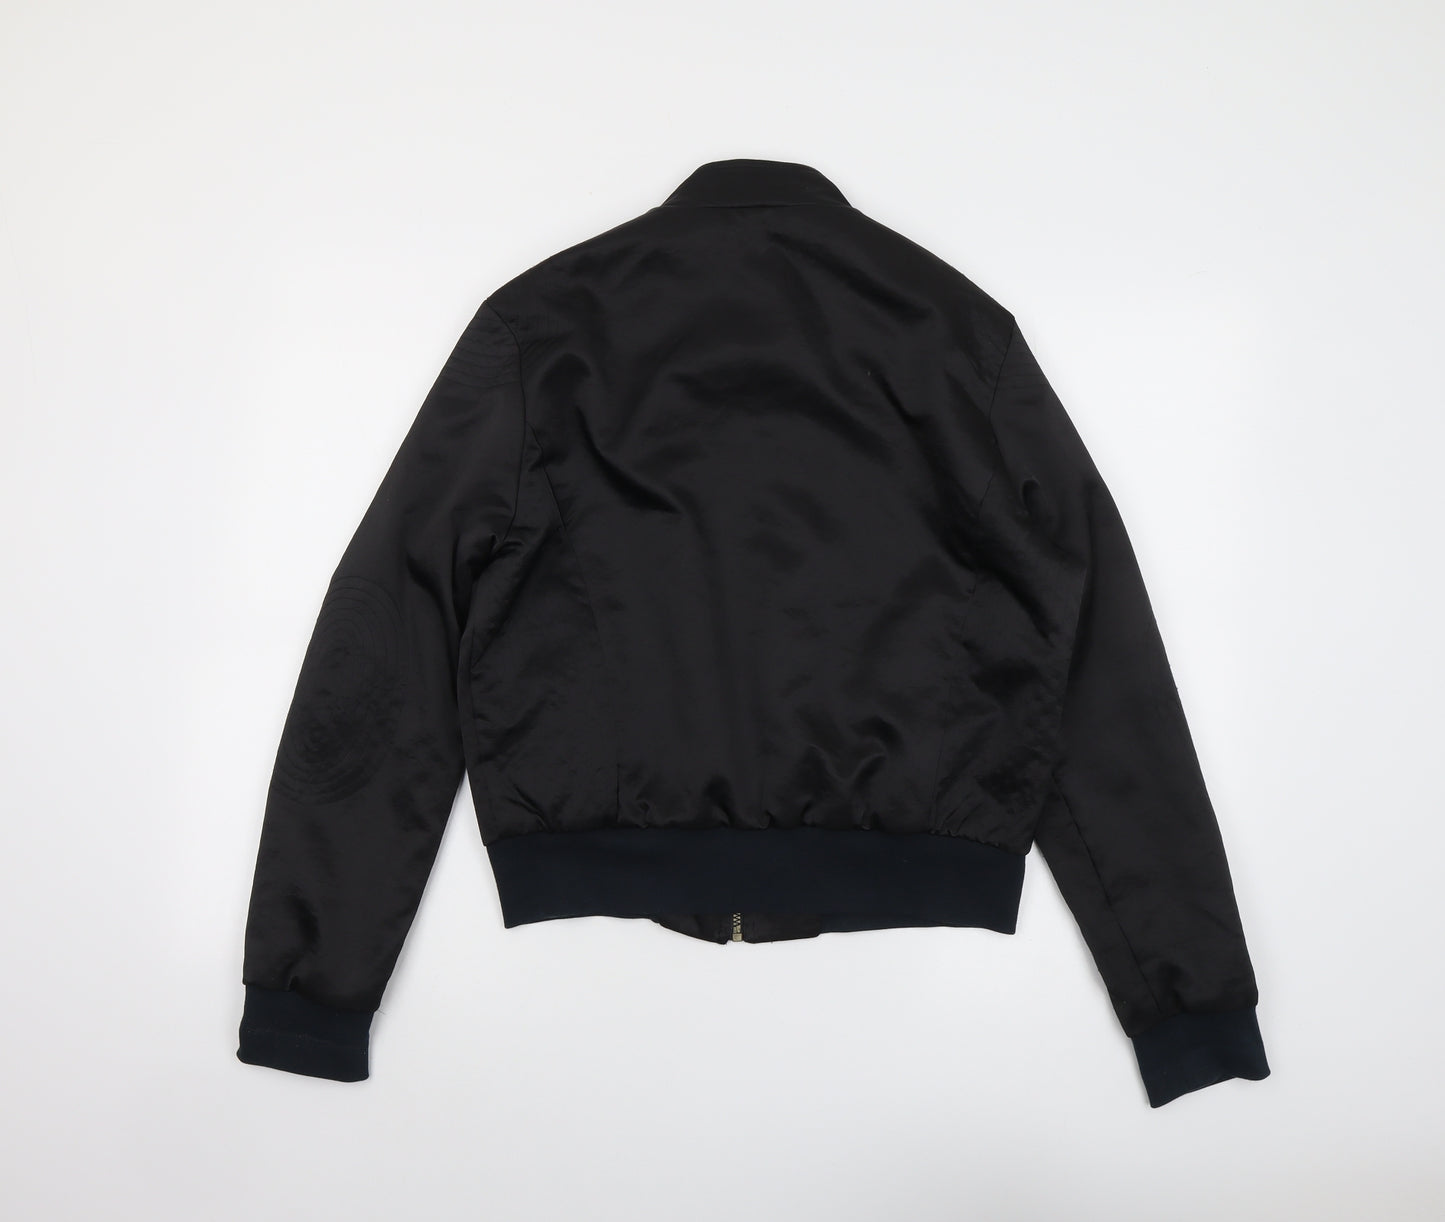 Marks and Spencer Womens Black Bomber Jacket Jacket Size 12 Zip